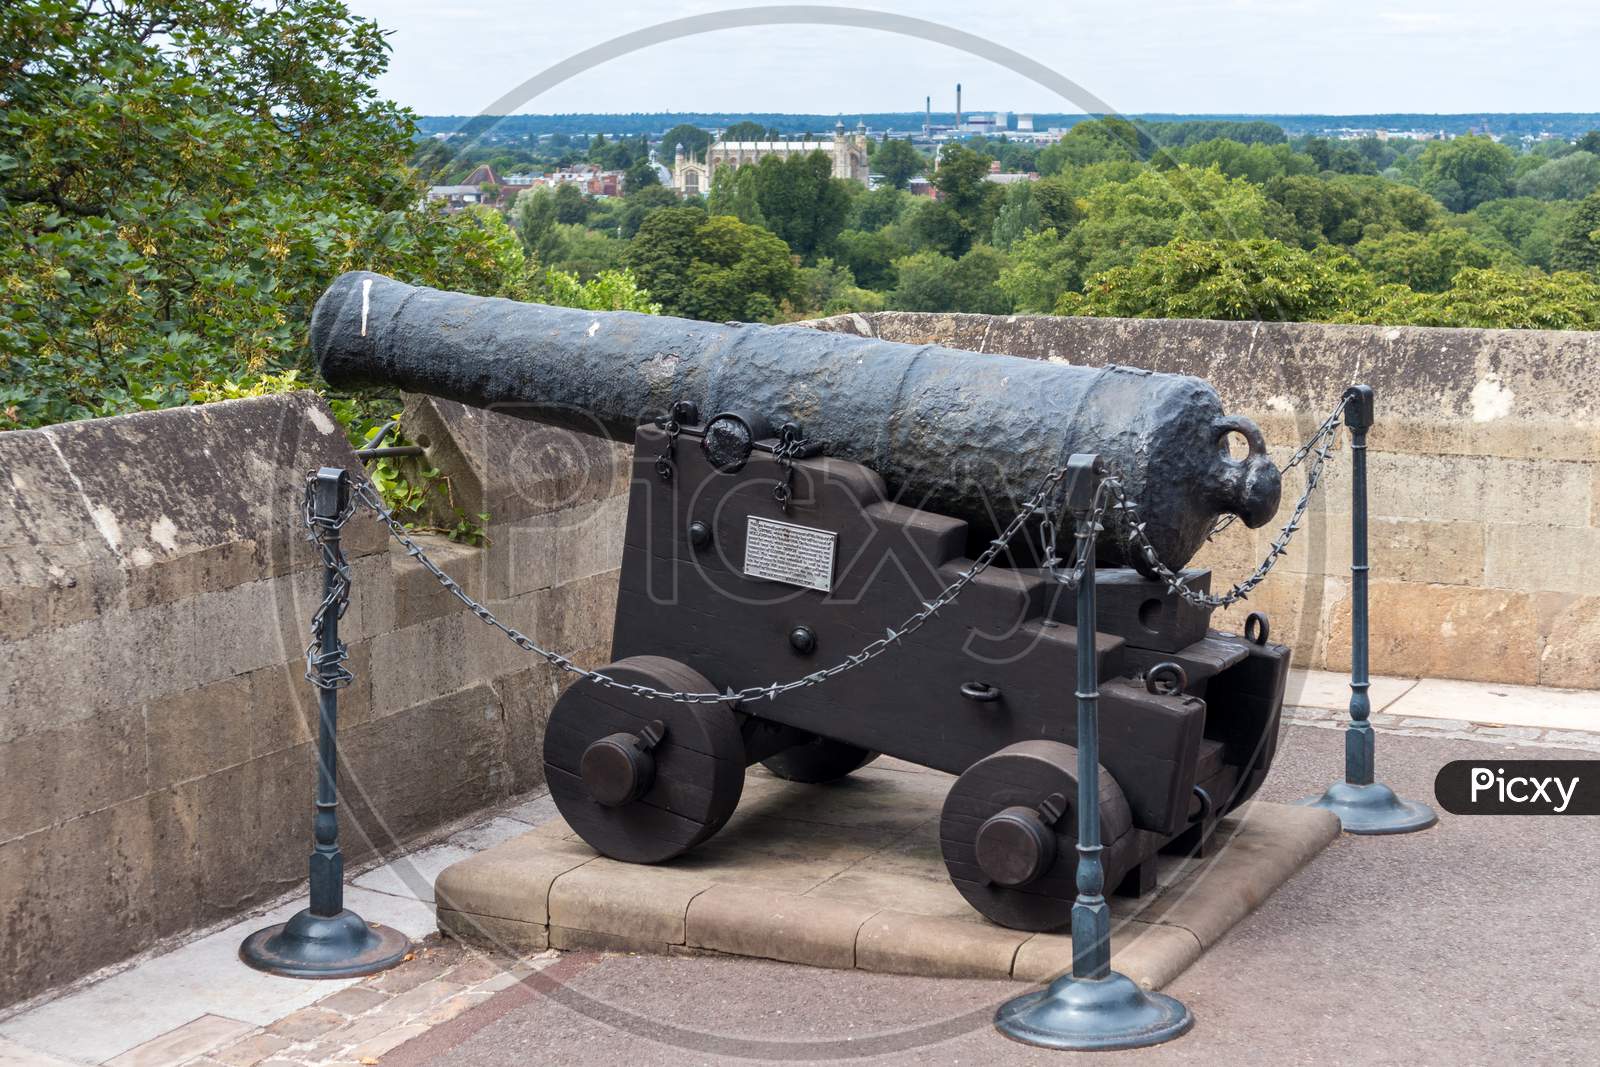 Windsor, Maidenhead & Windsor/Uk - July 22 : Ancient Cannon At Windsor Castle In Windsor, Maidenhead & Windsor On July 22, 2018